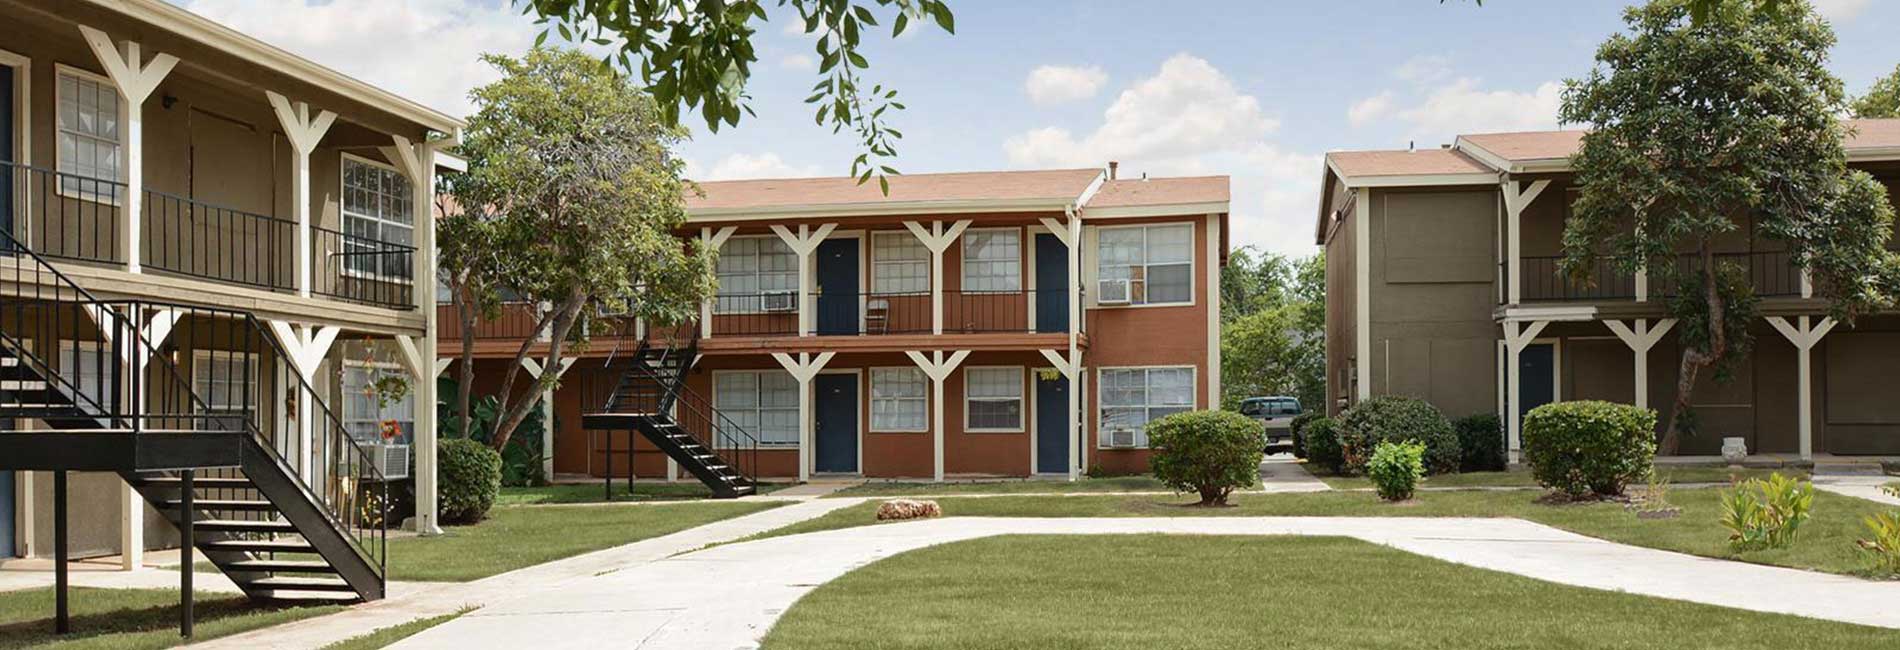 Utopia Place Apartments in San Antonio, Texas